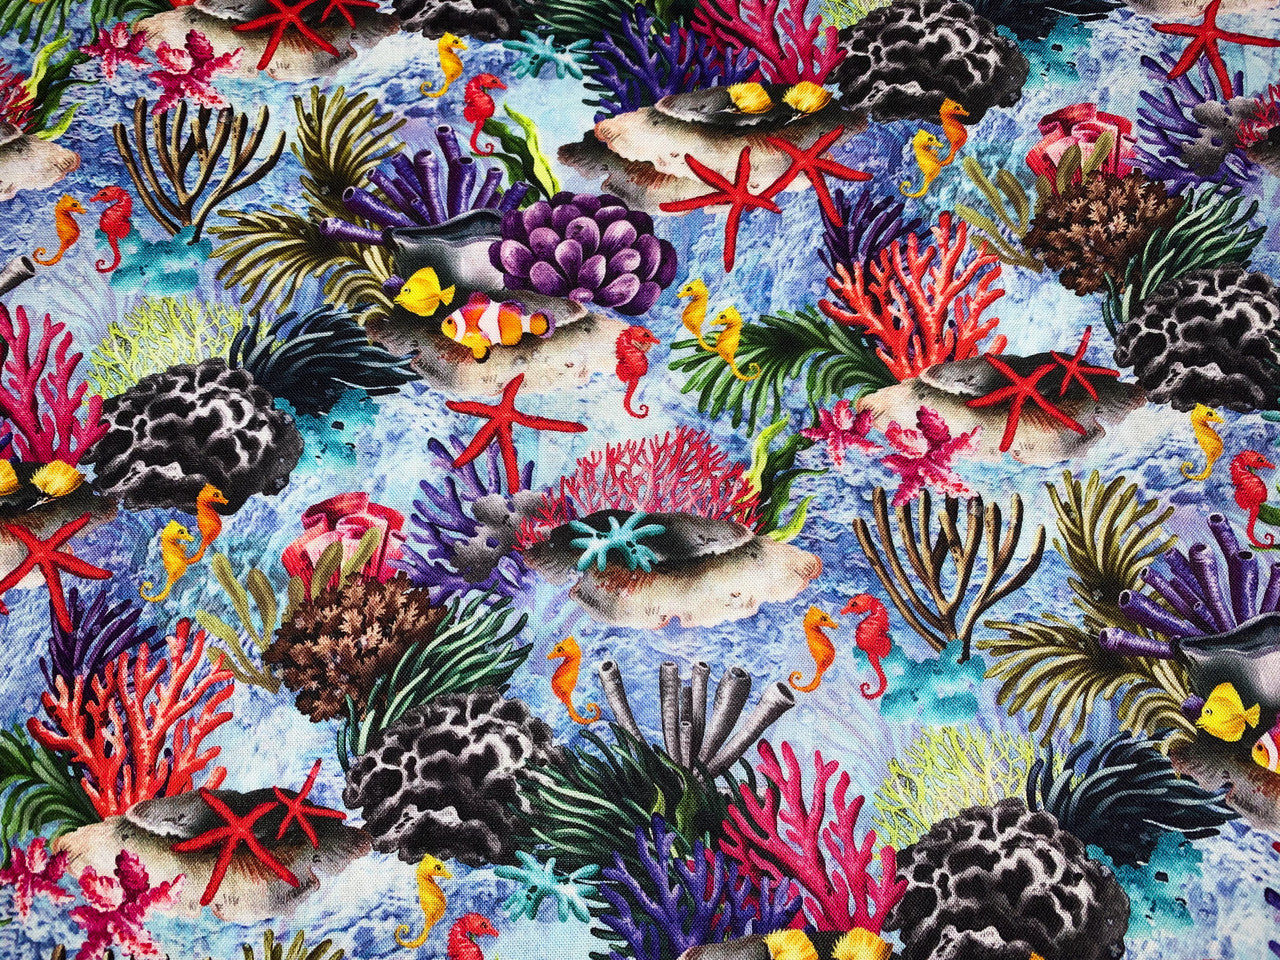 Light Blue Reef Ocean fabric 59-3862 Sea fabric